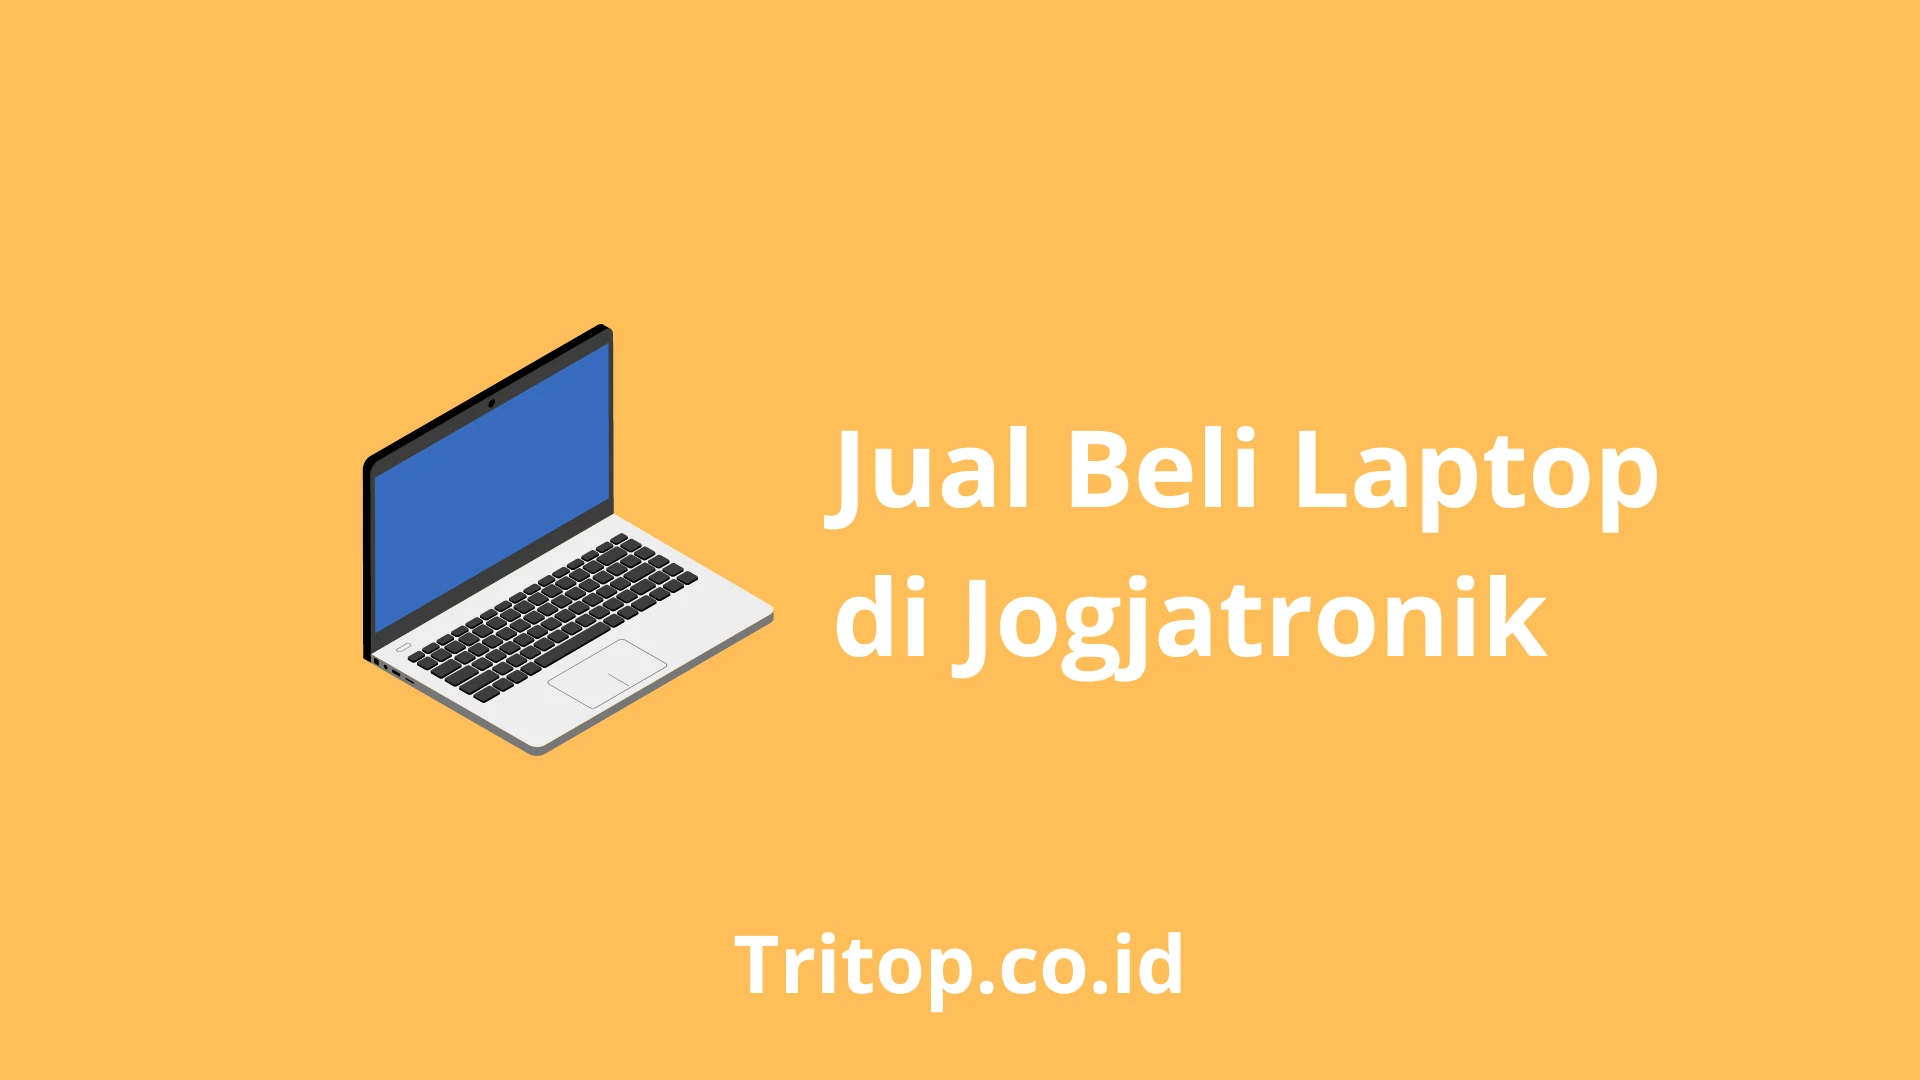 Jual Beli Laptop jogjatronik tritop.co.id